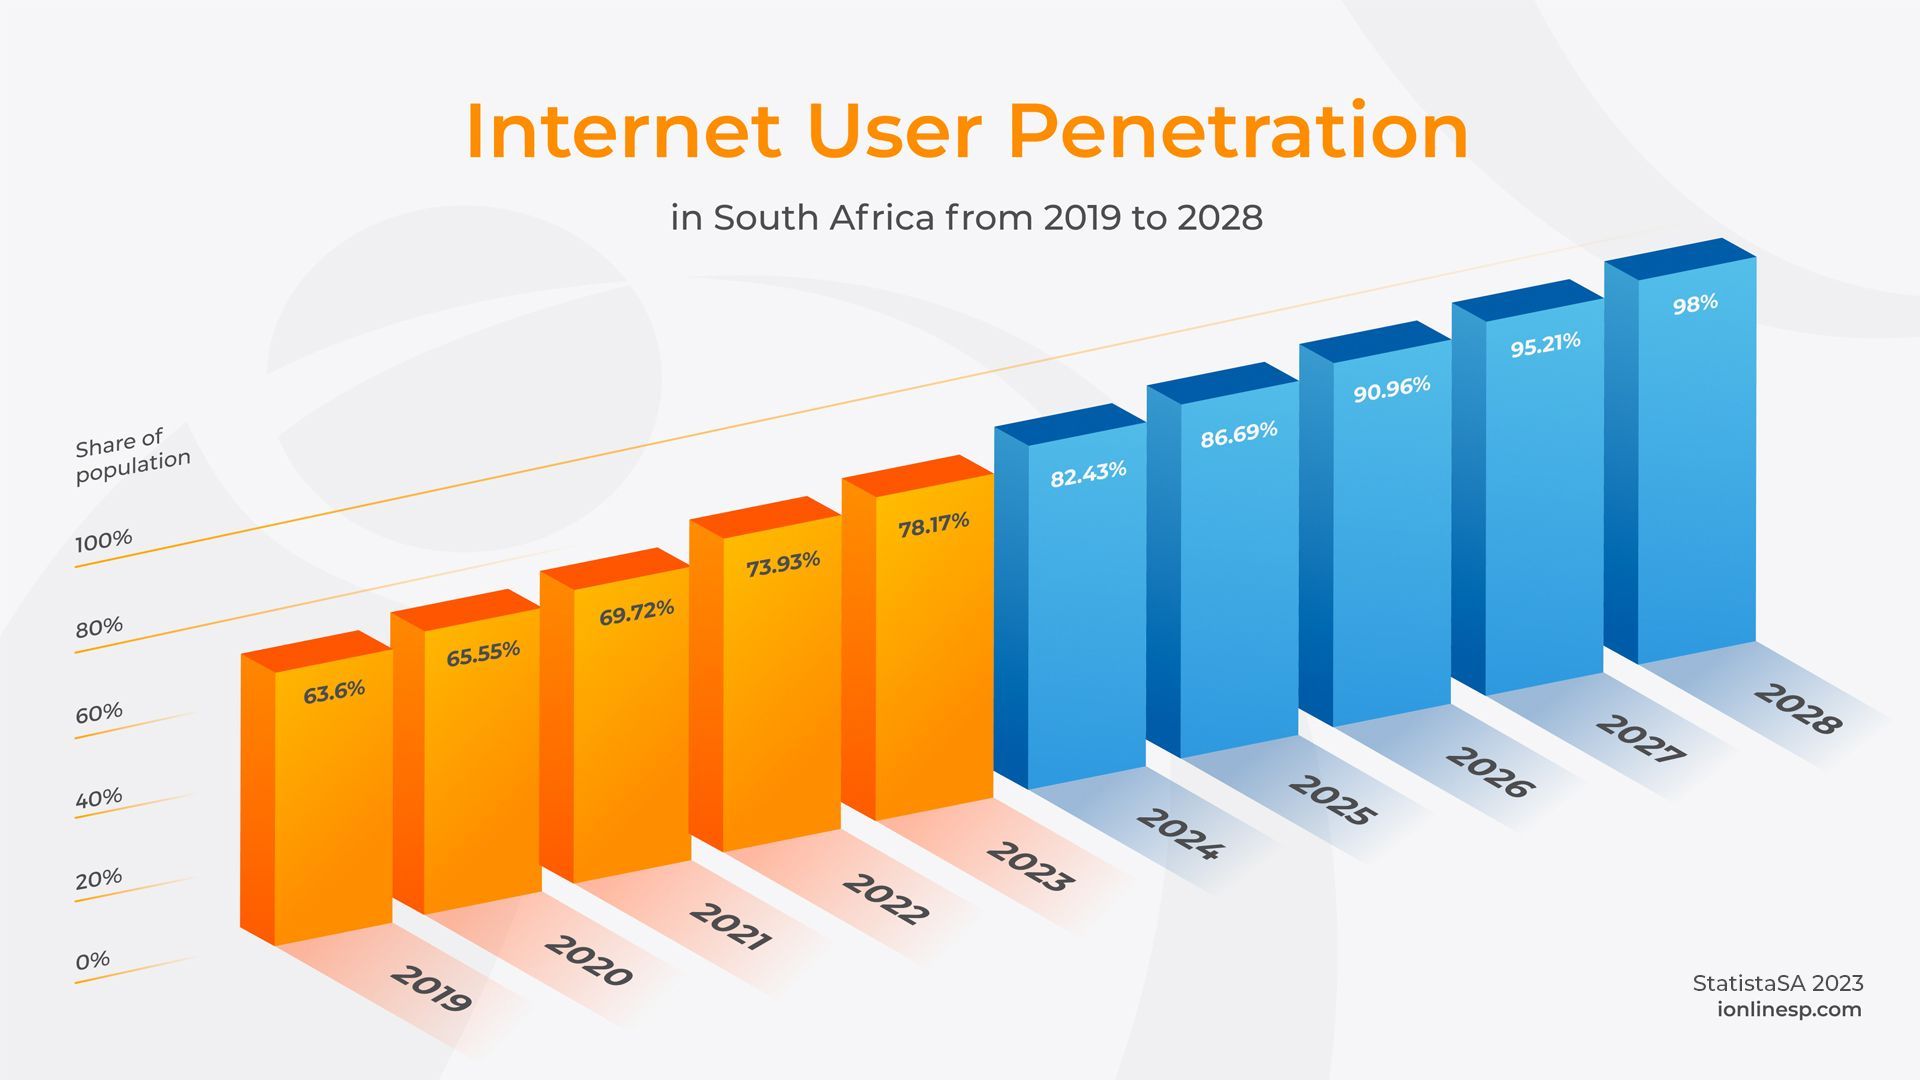 Graph showing Internet User Penetration